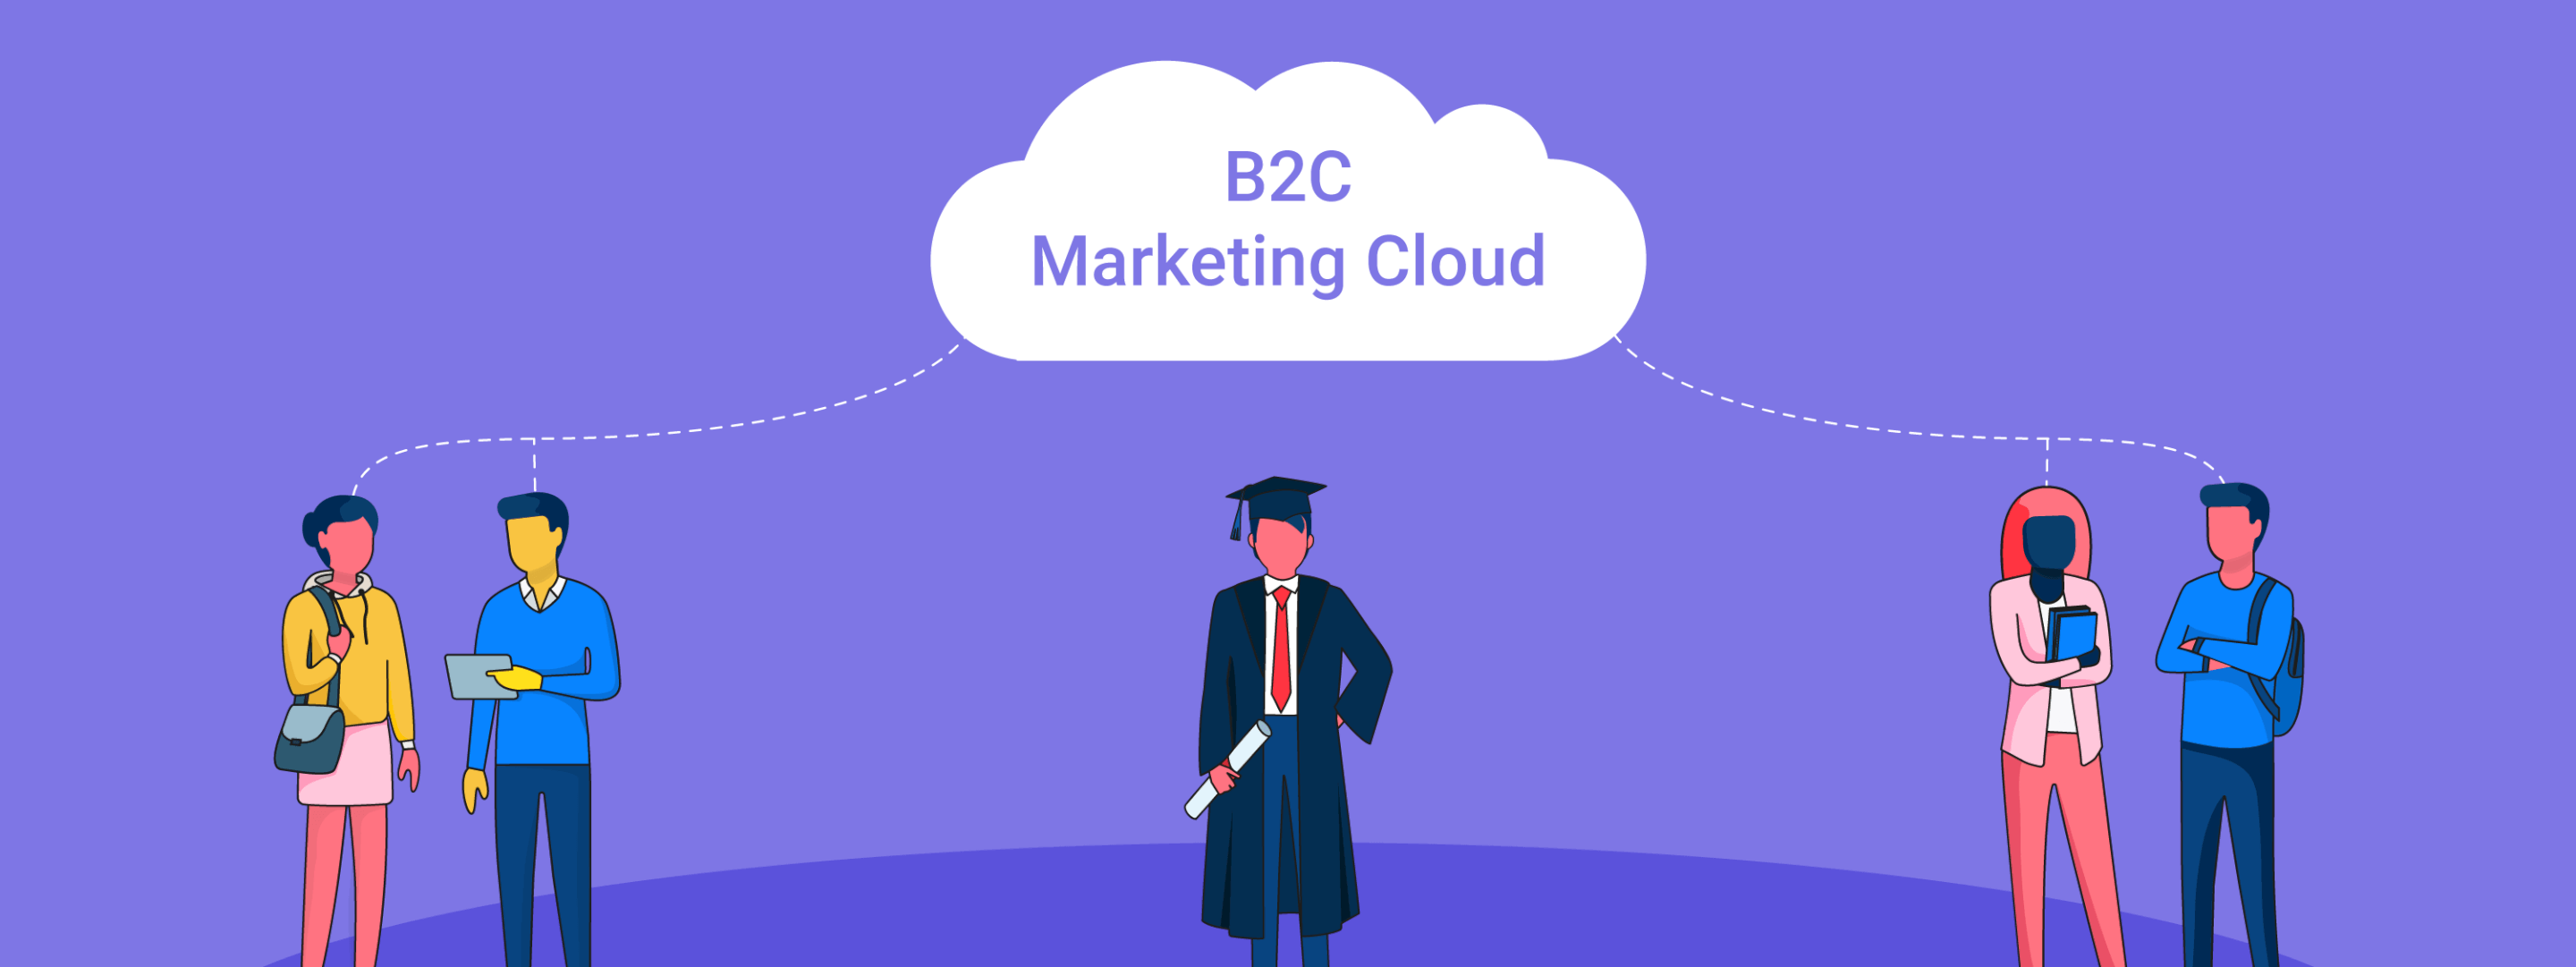 How EdTech Companies can ace Teacher Retention with a B2C Marketing Cloud - part 2